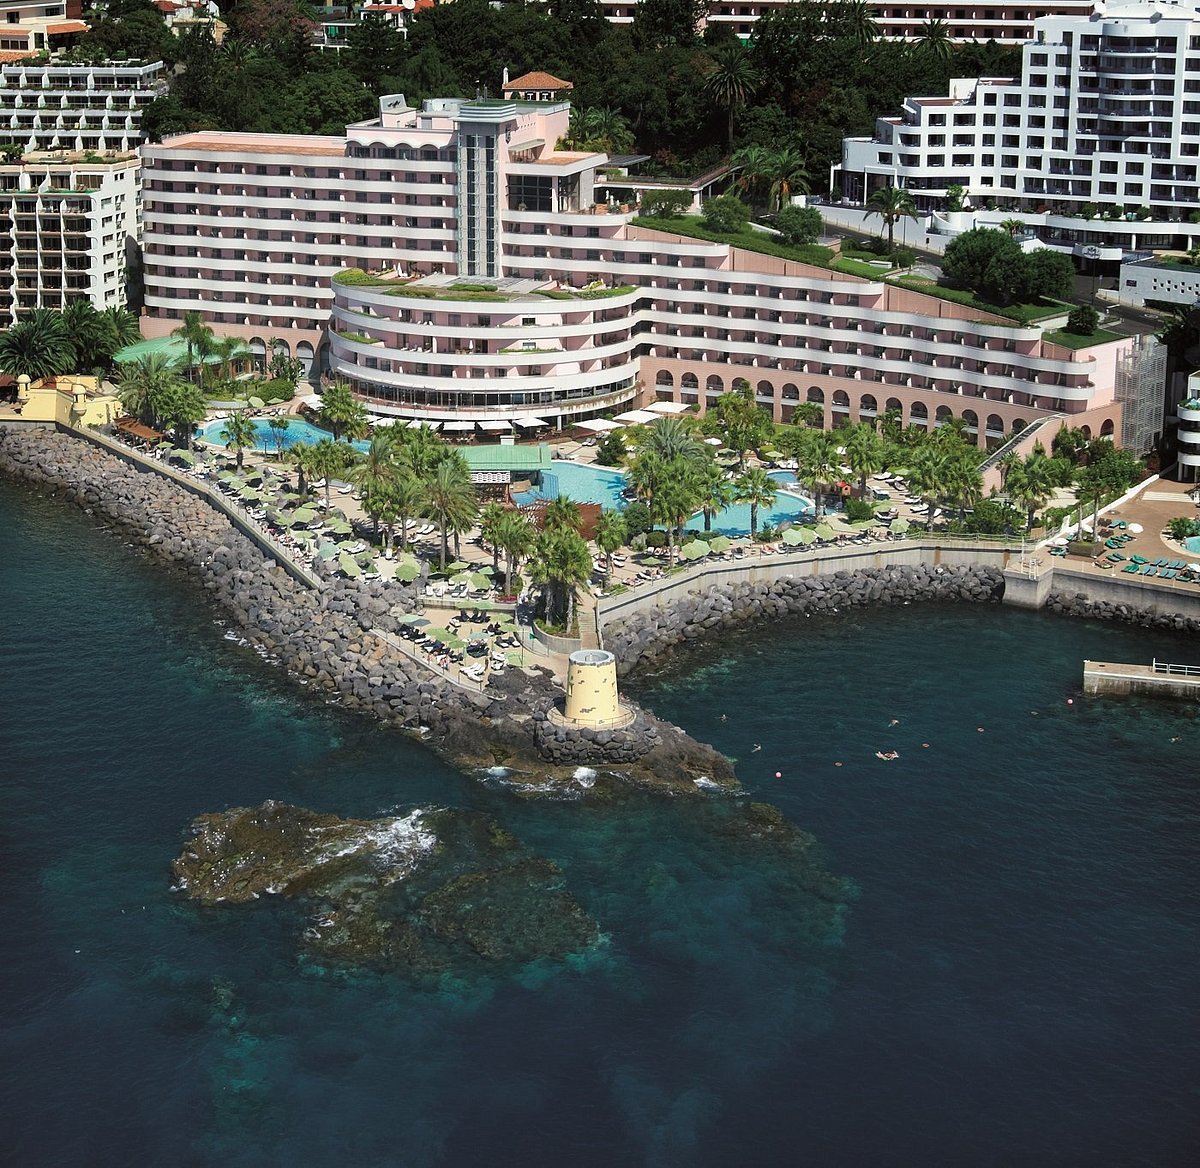 Royal Savoy Hotel, hotel in Funchal